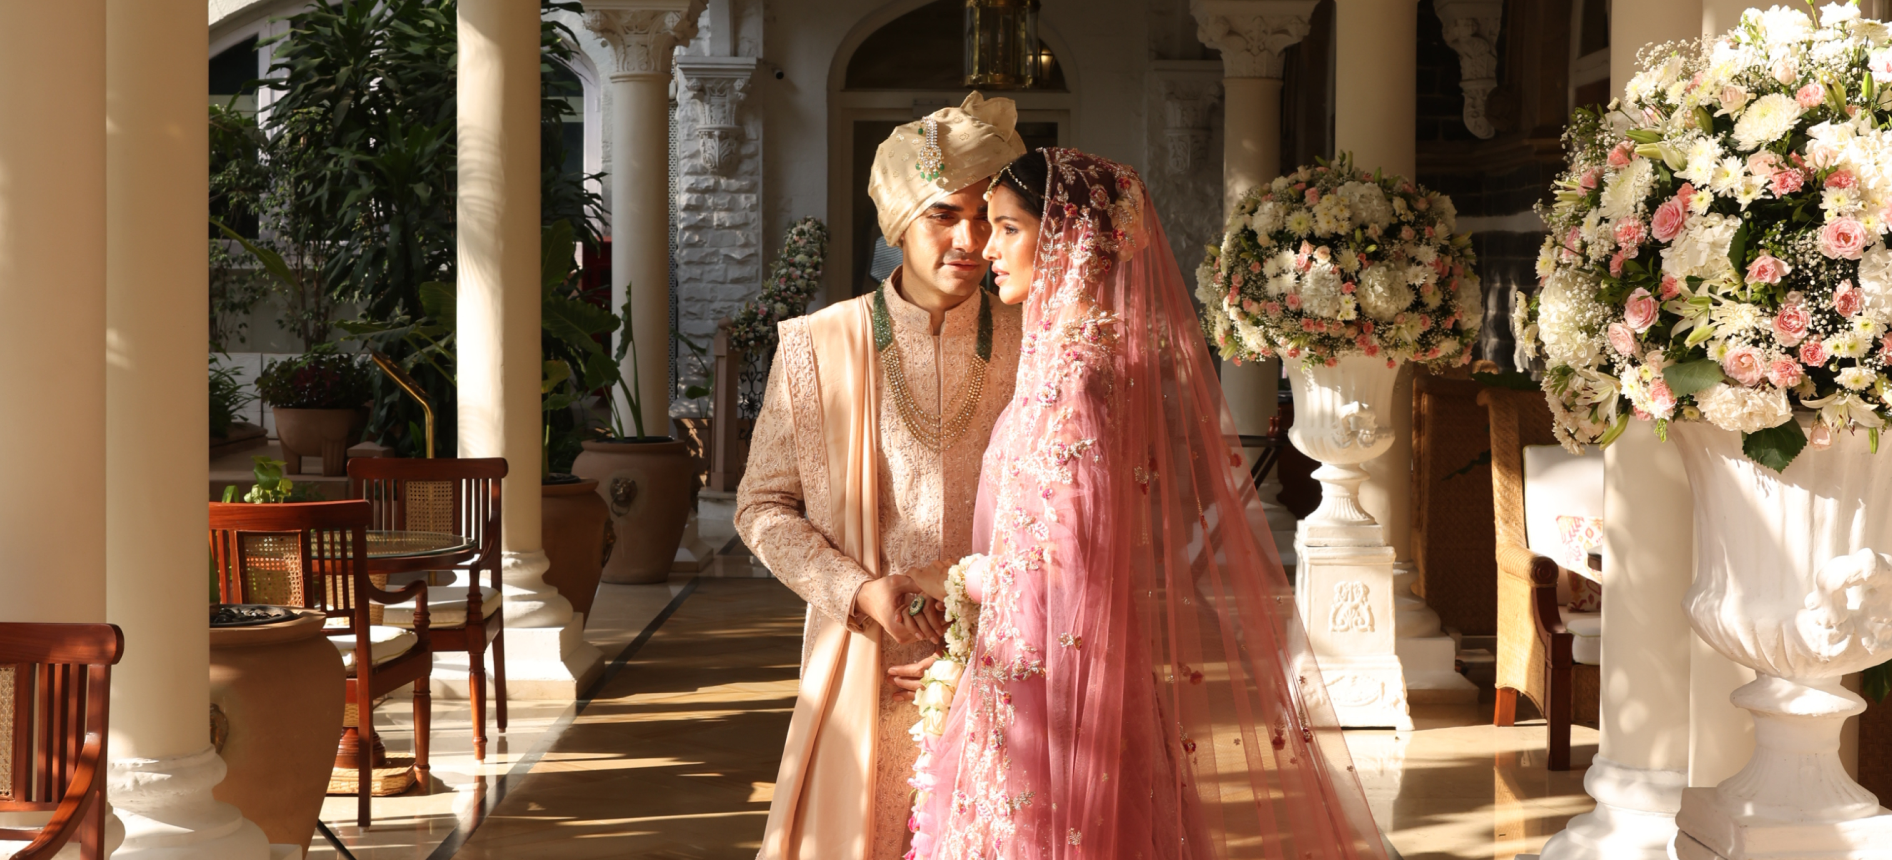 Iconic City Weddings - Luxury Wedding at Taj hotels